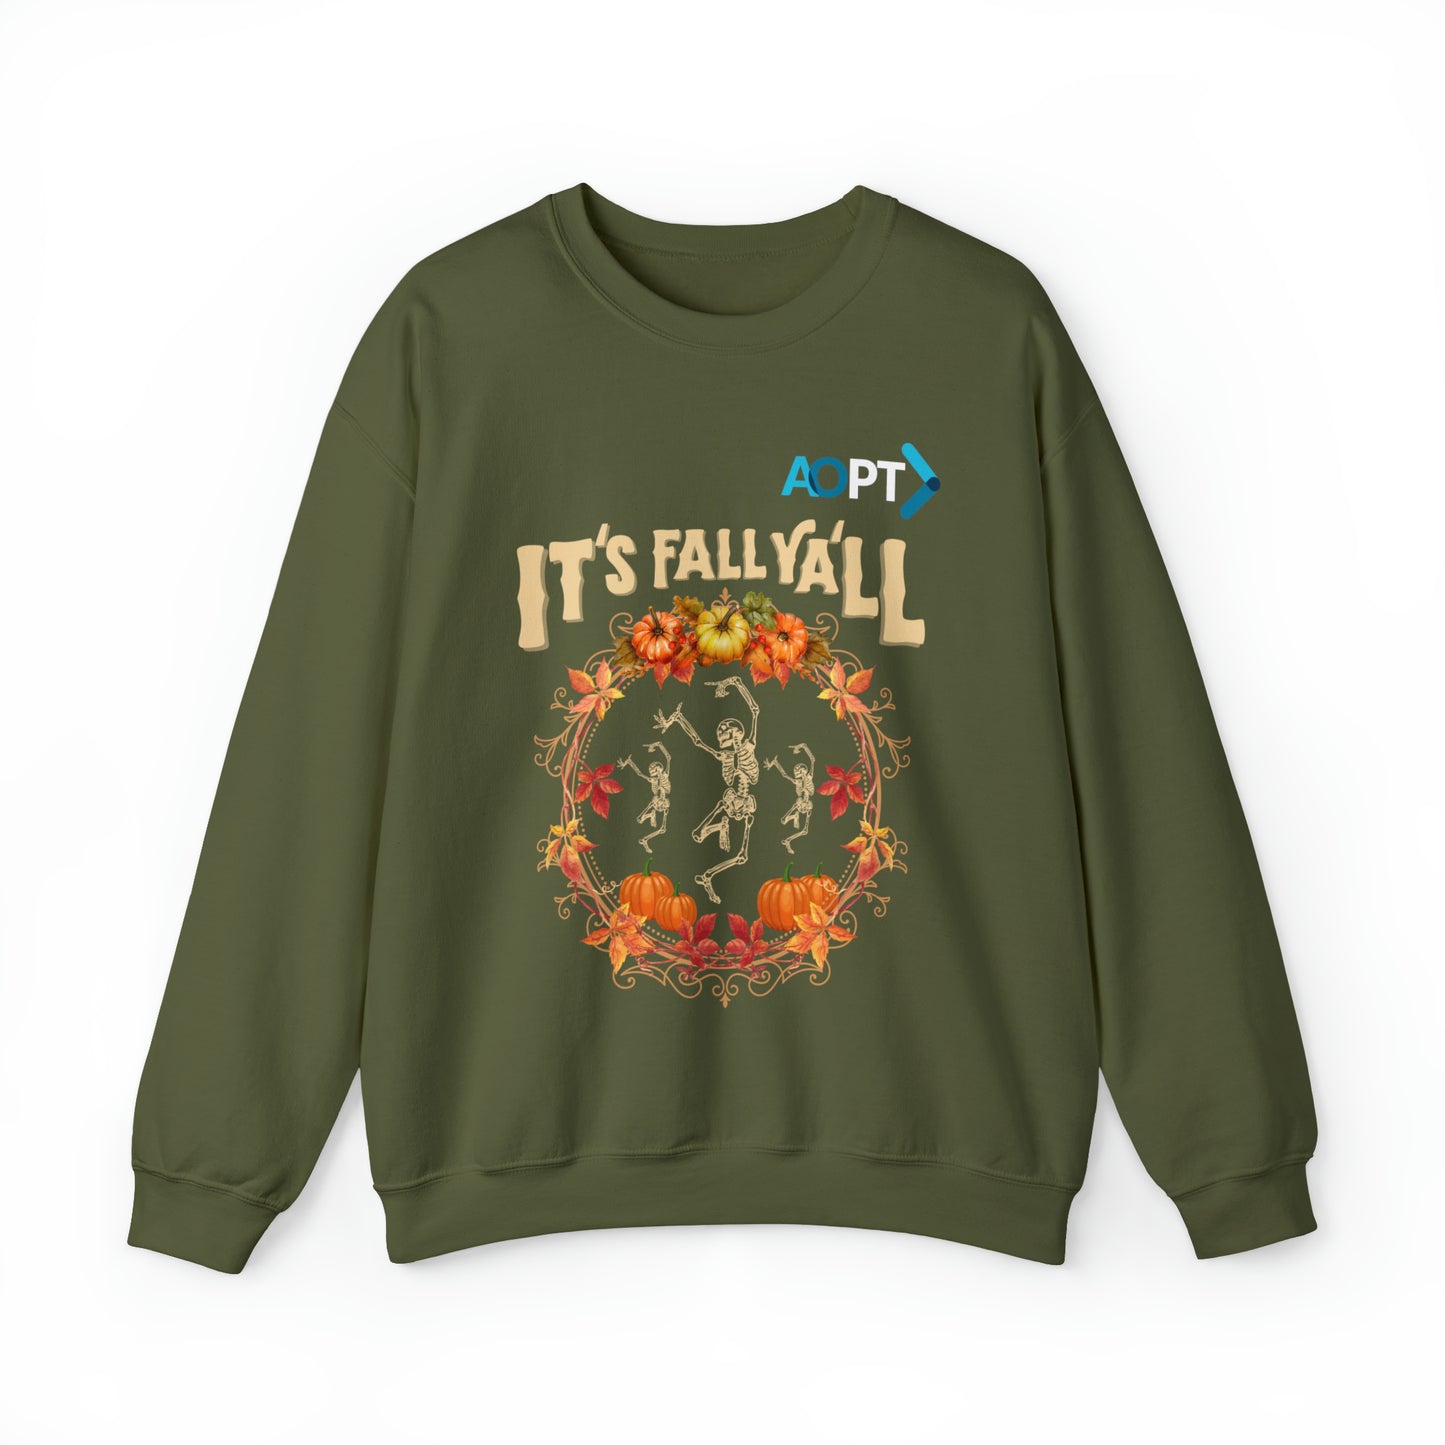 It's Fall Ya'll Crewneck Sweatshirt